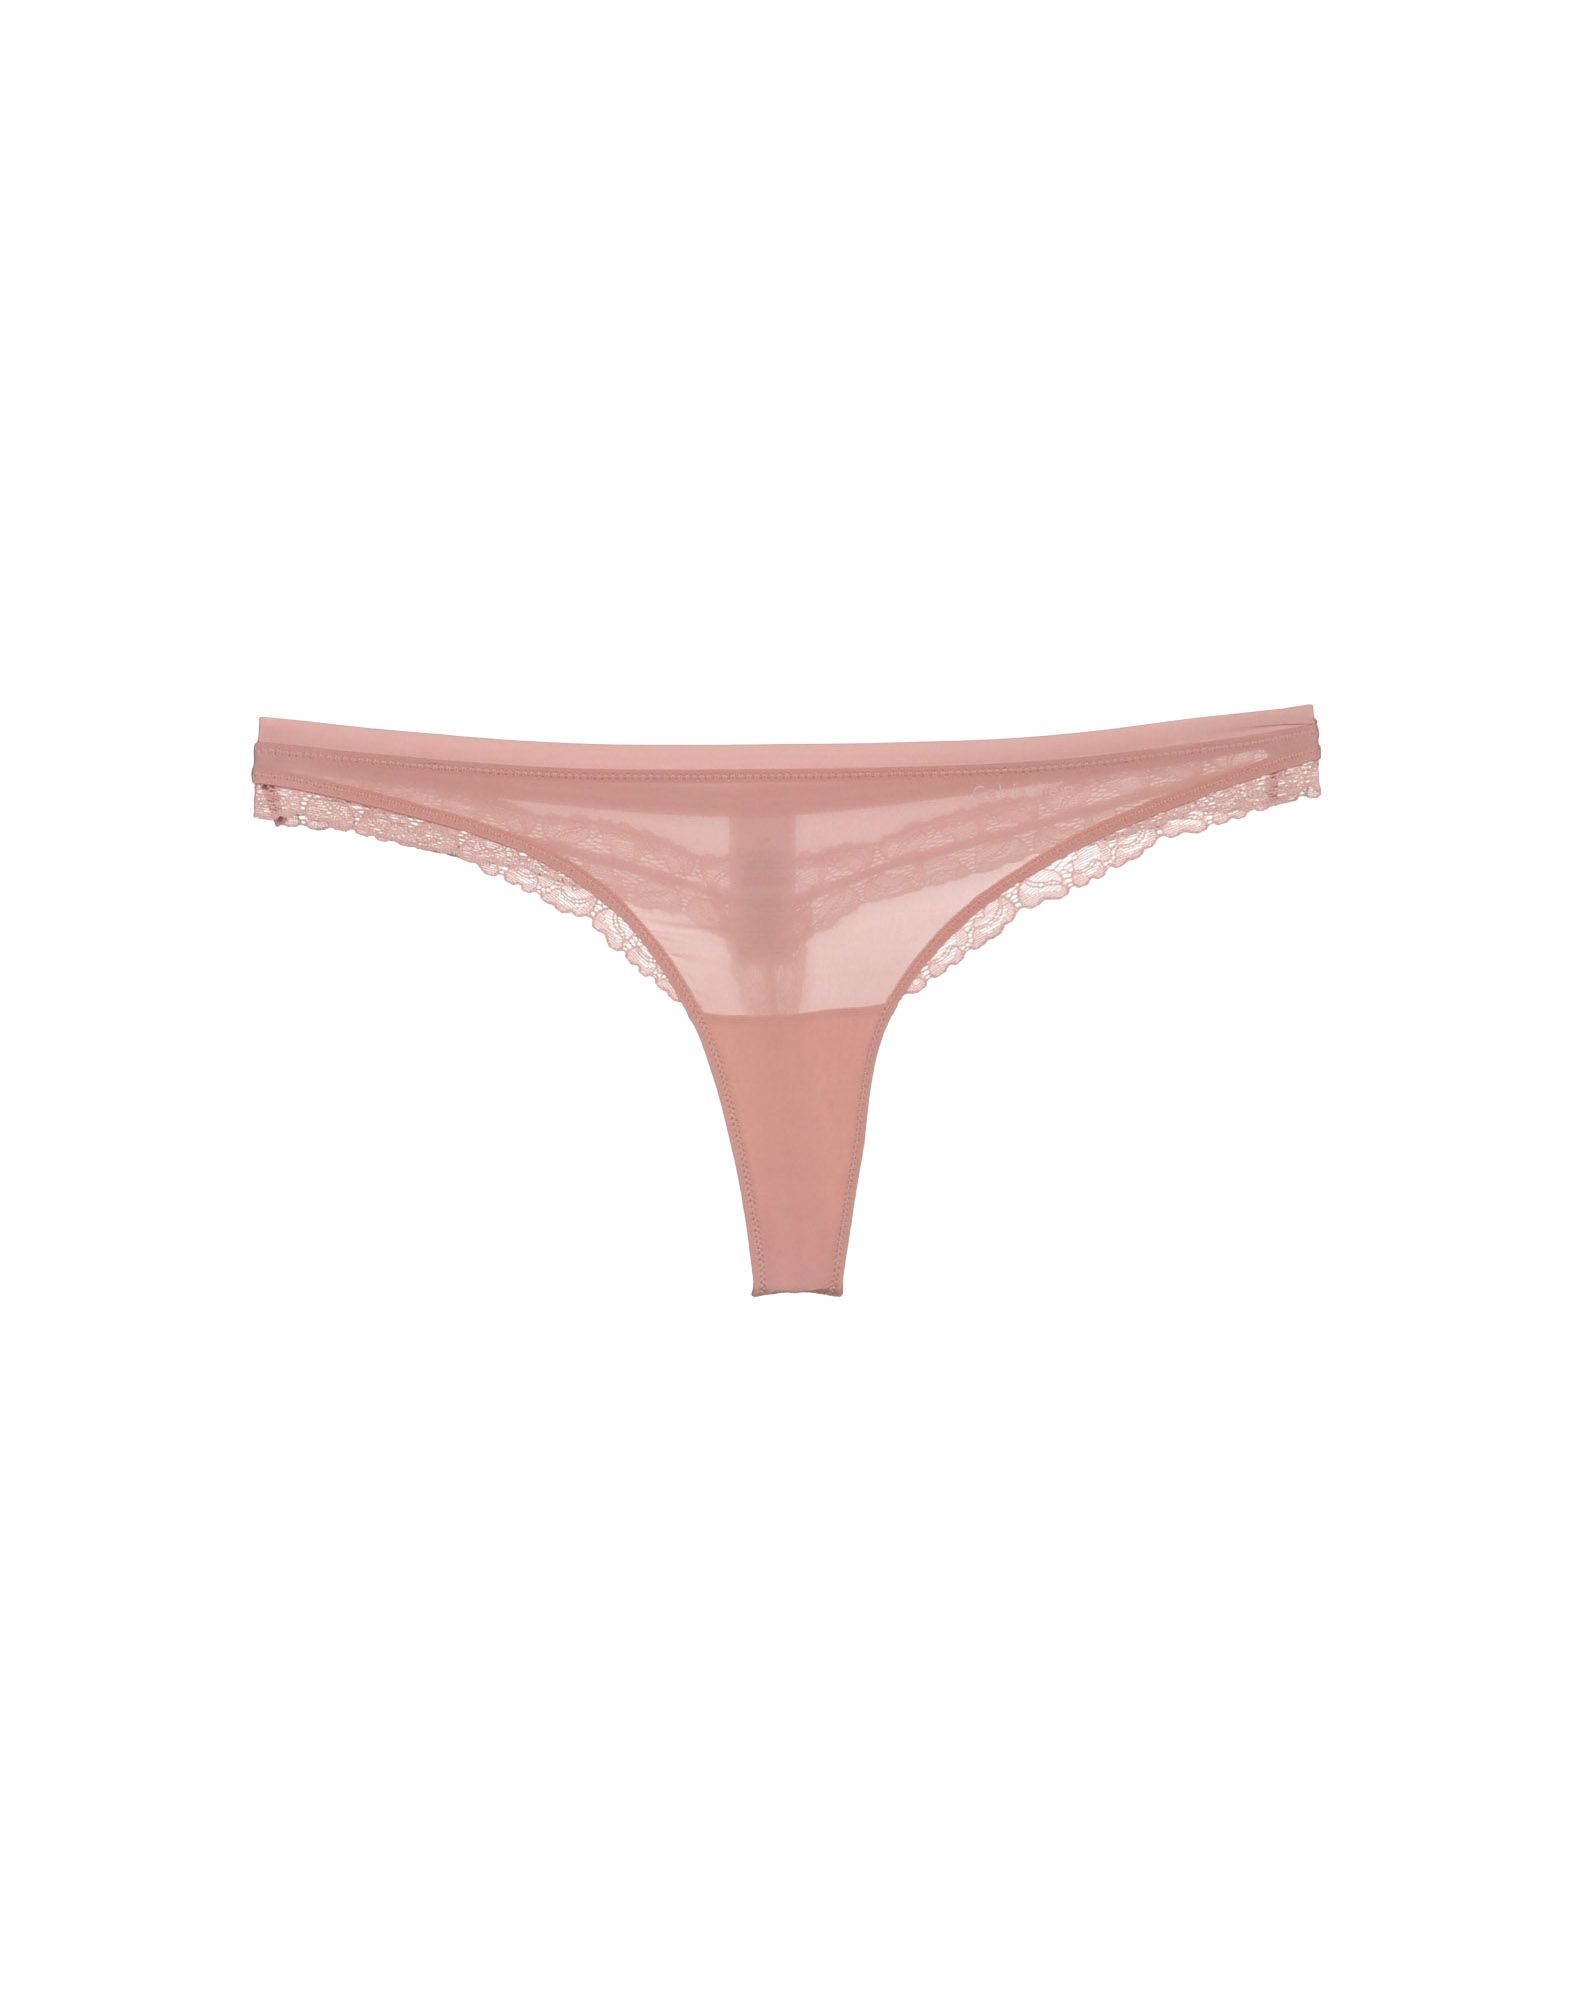 Foto Calvin Klein Underwear Tangas Mujer Rosa